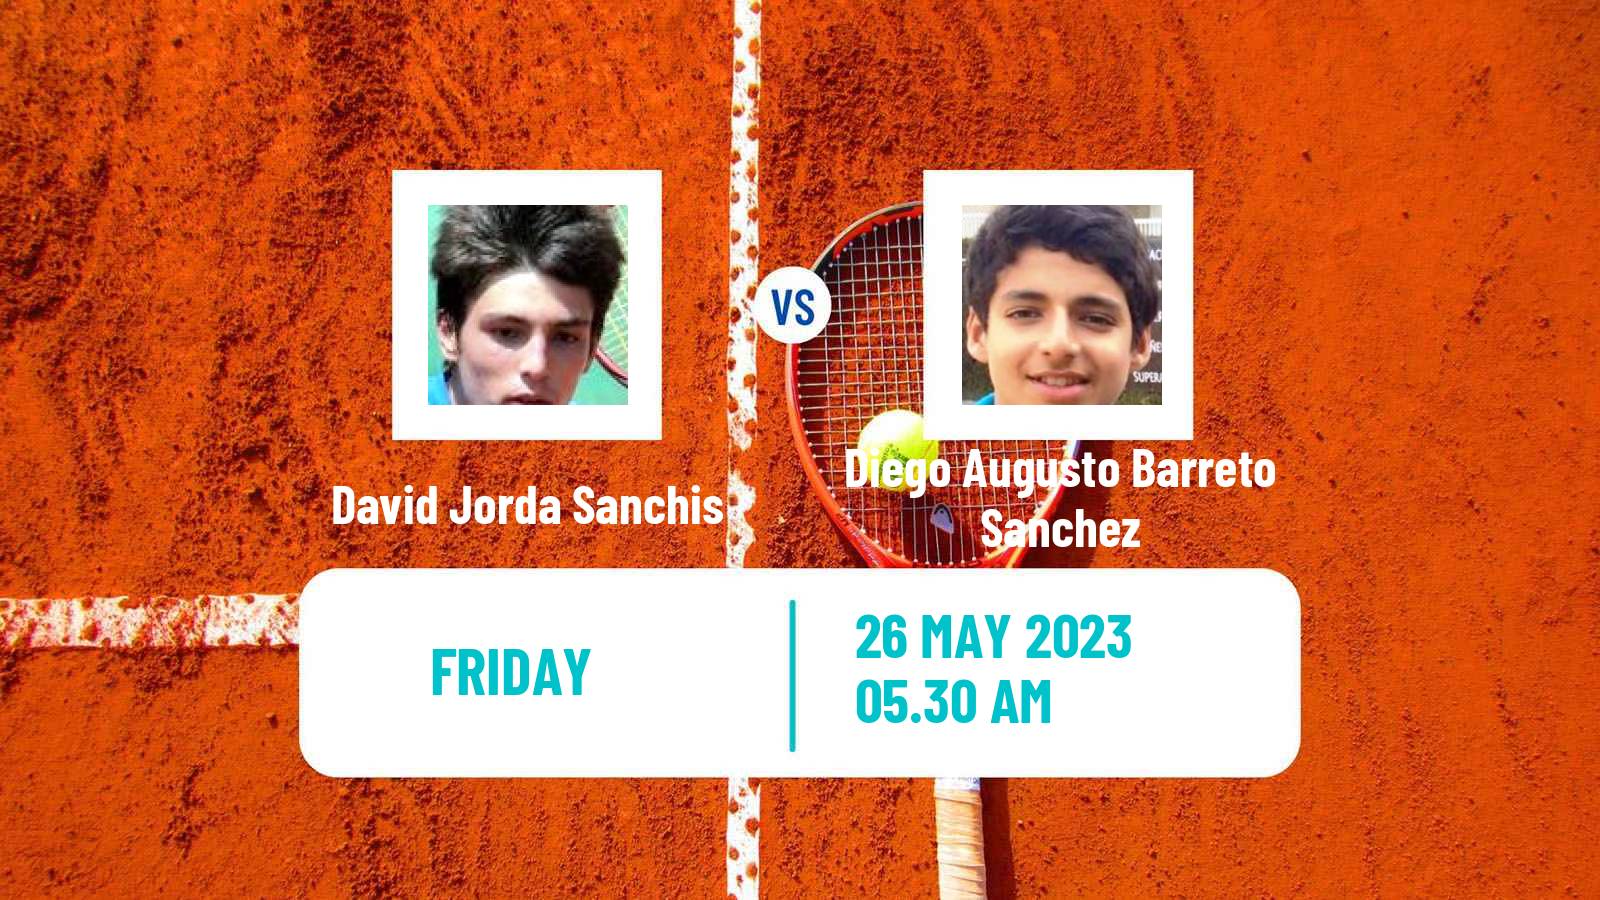 Tennis ITF M25 Mataro Men David Jorda Sanchis - Diego Augusto Barreto Sanchez